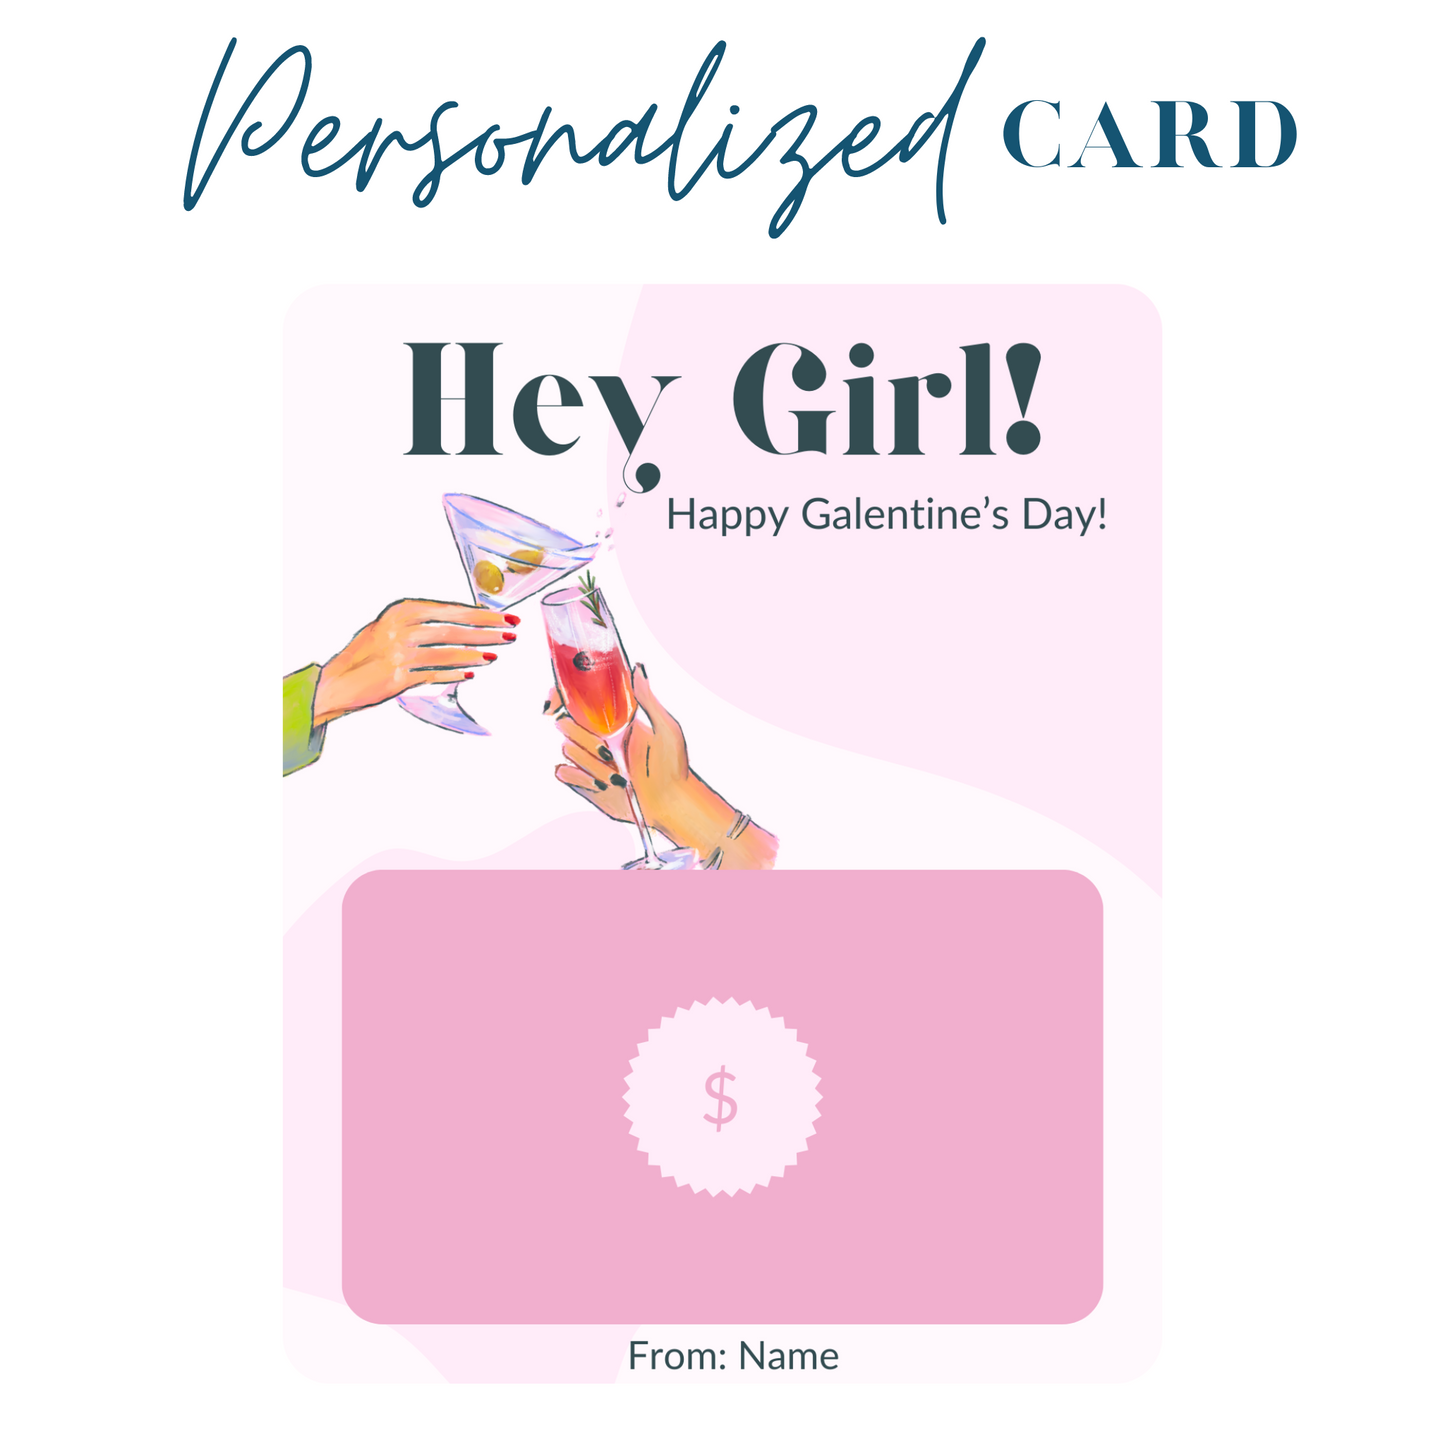 Hey Girl! Galentine Gift Card holder greeting card